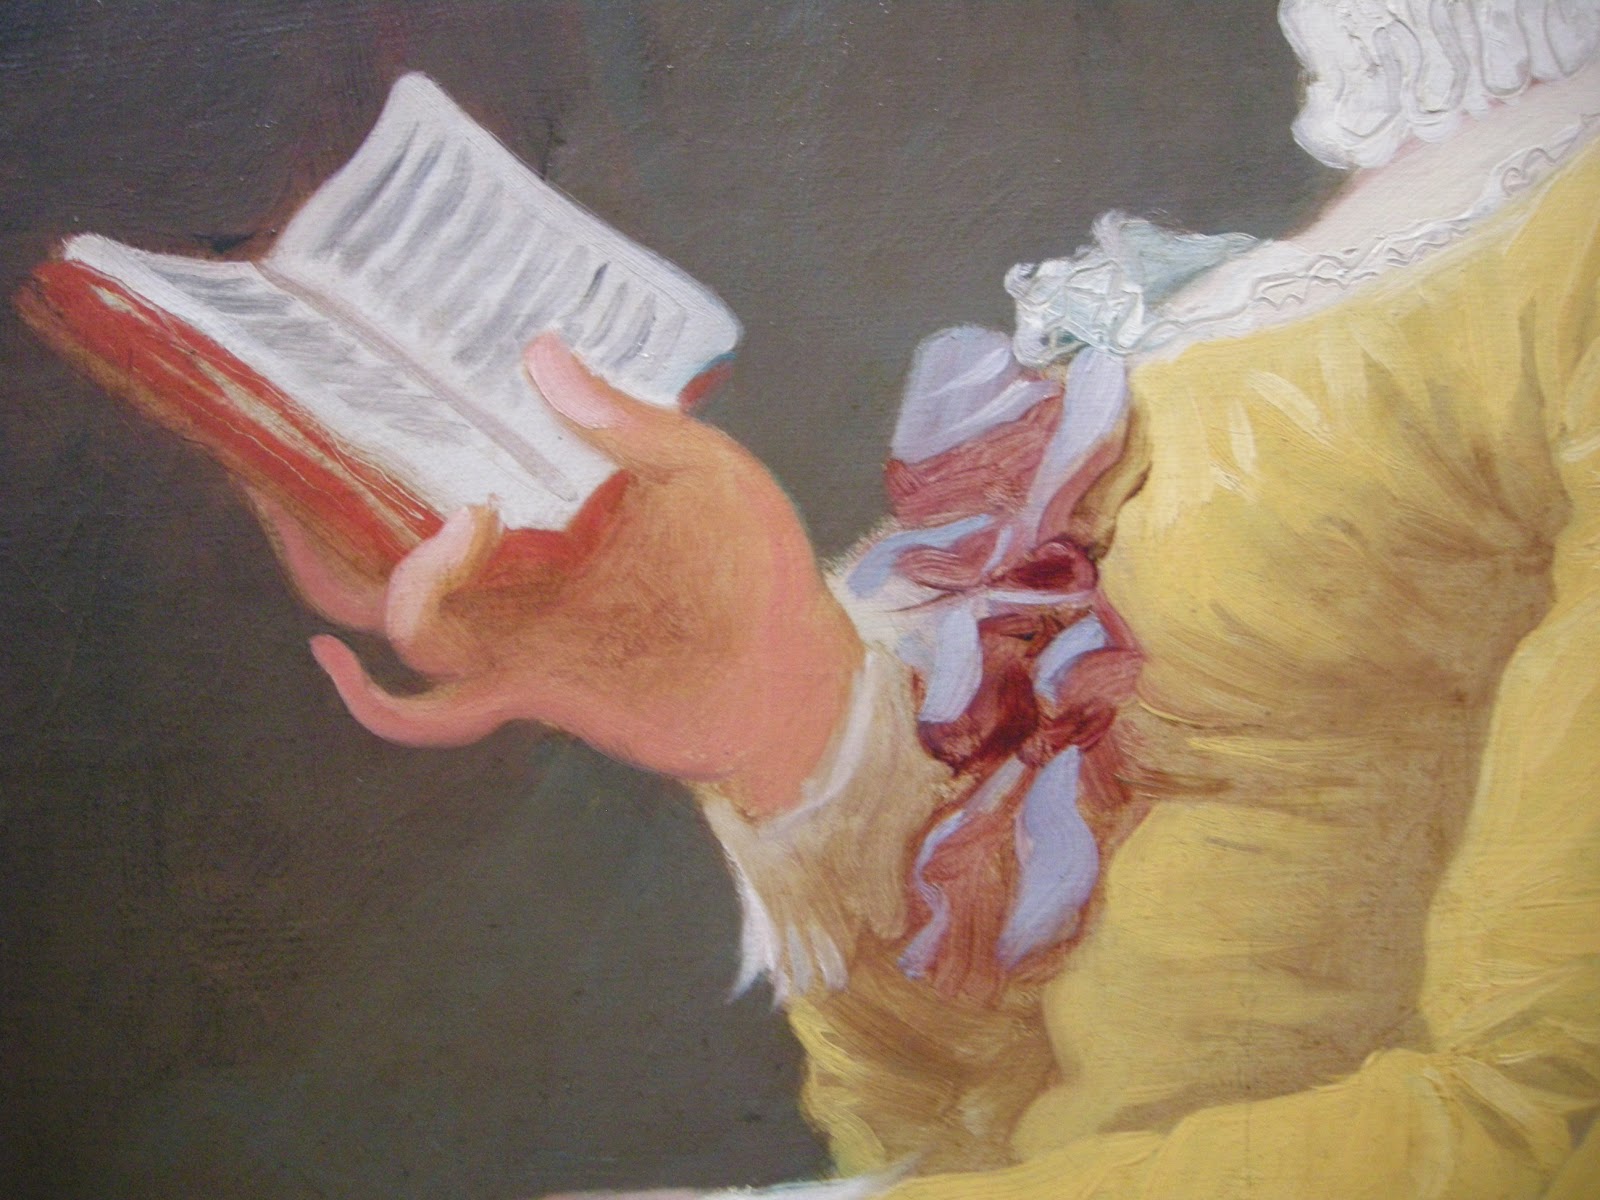 Jean+Honore+Fragonard-1732-1806 (128).jpg